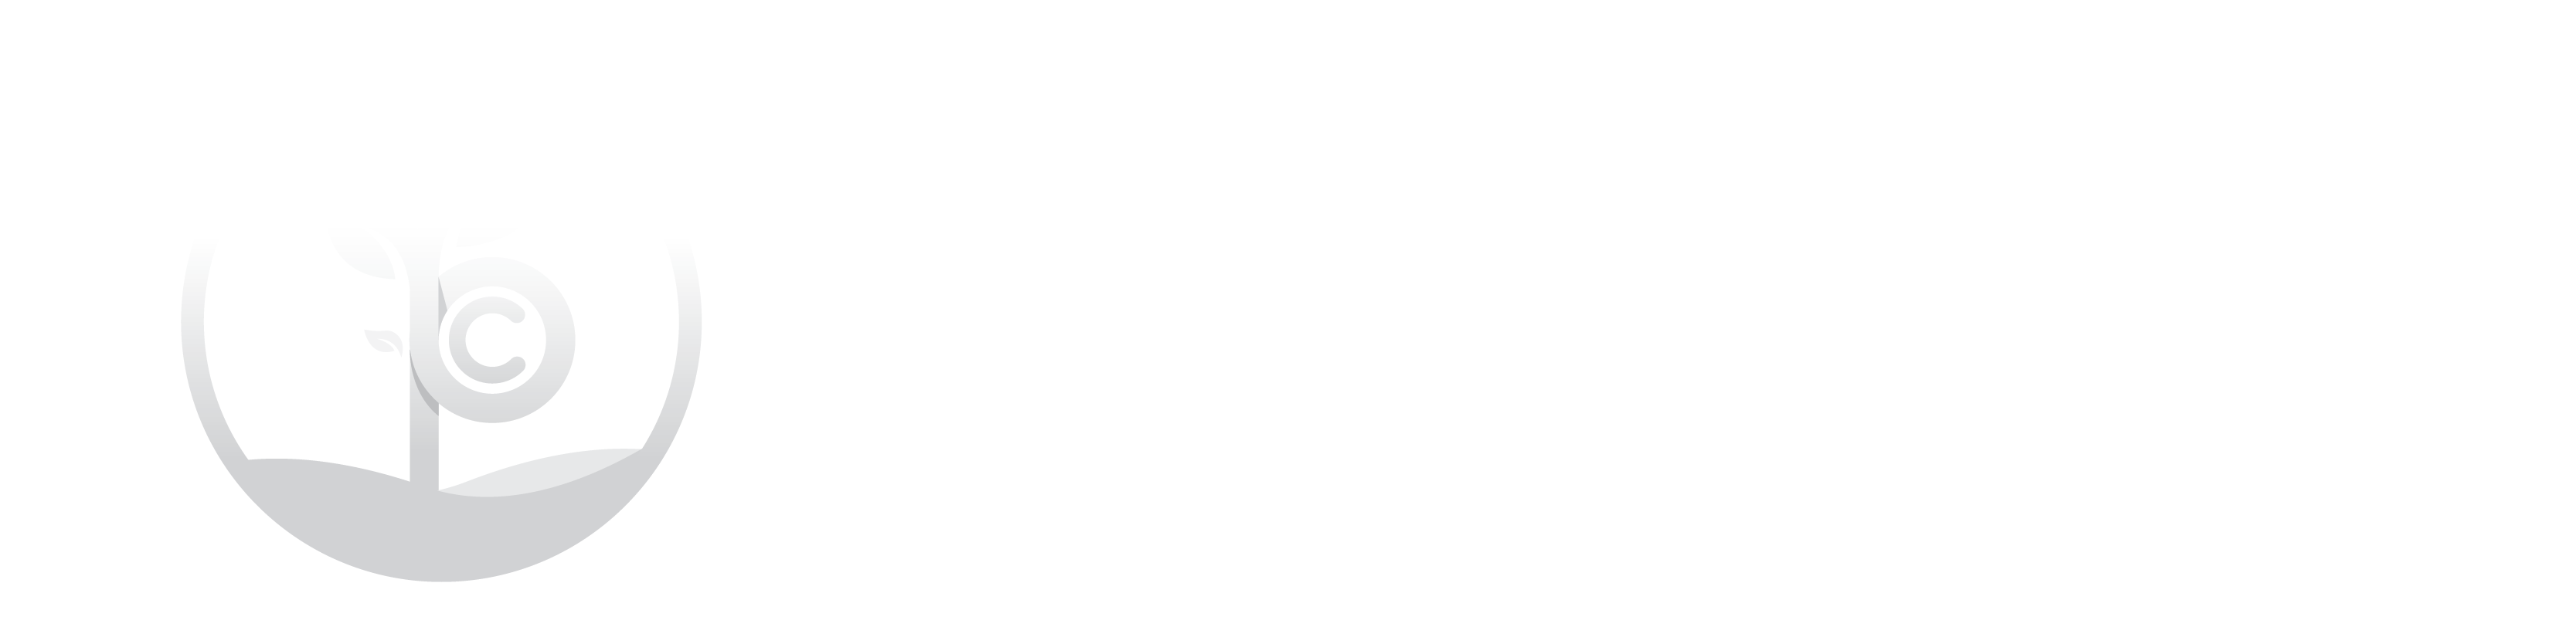 Plant Craft